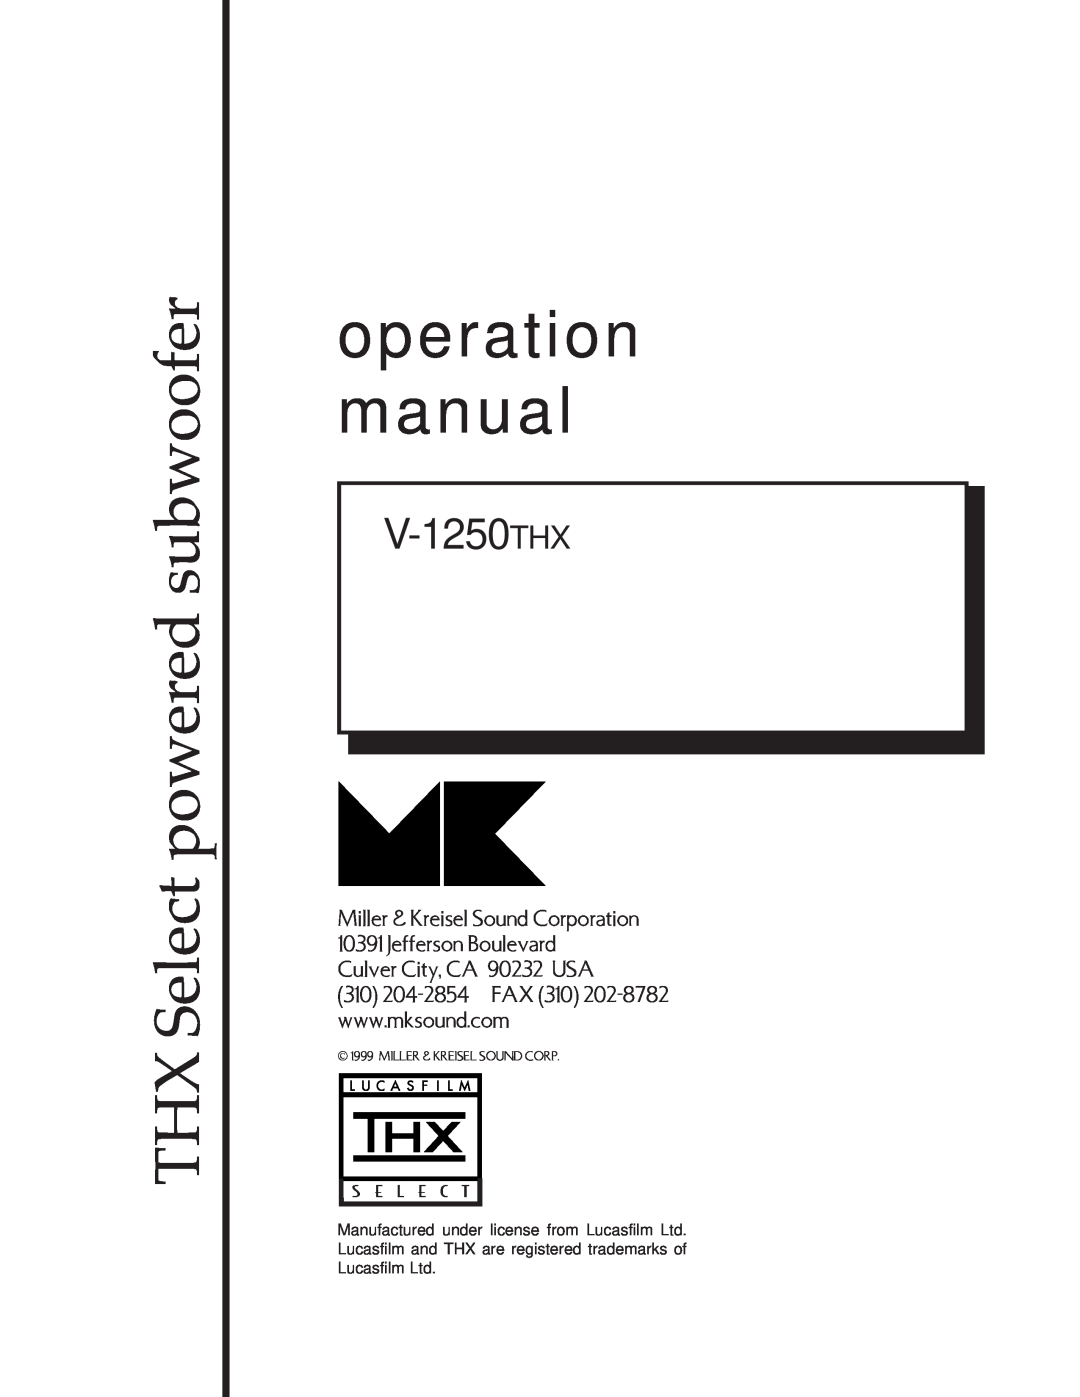 MK Sound V-1250THX operation manual THX Select powered subwoofer, Miller & Kreisel Sound Corporation, Jefferson Boulevard 